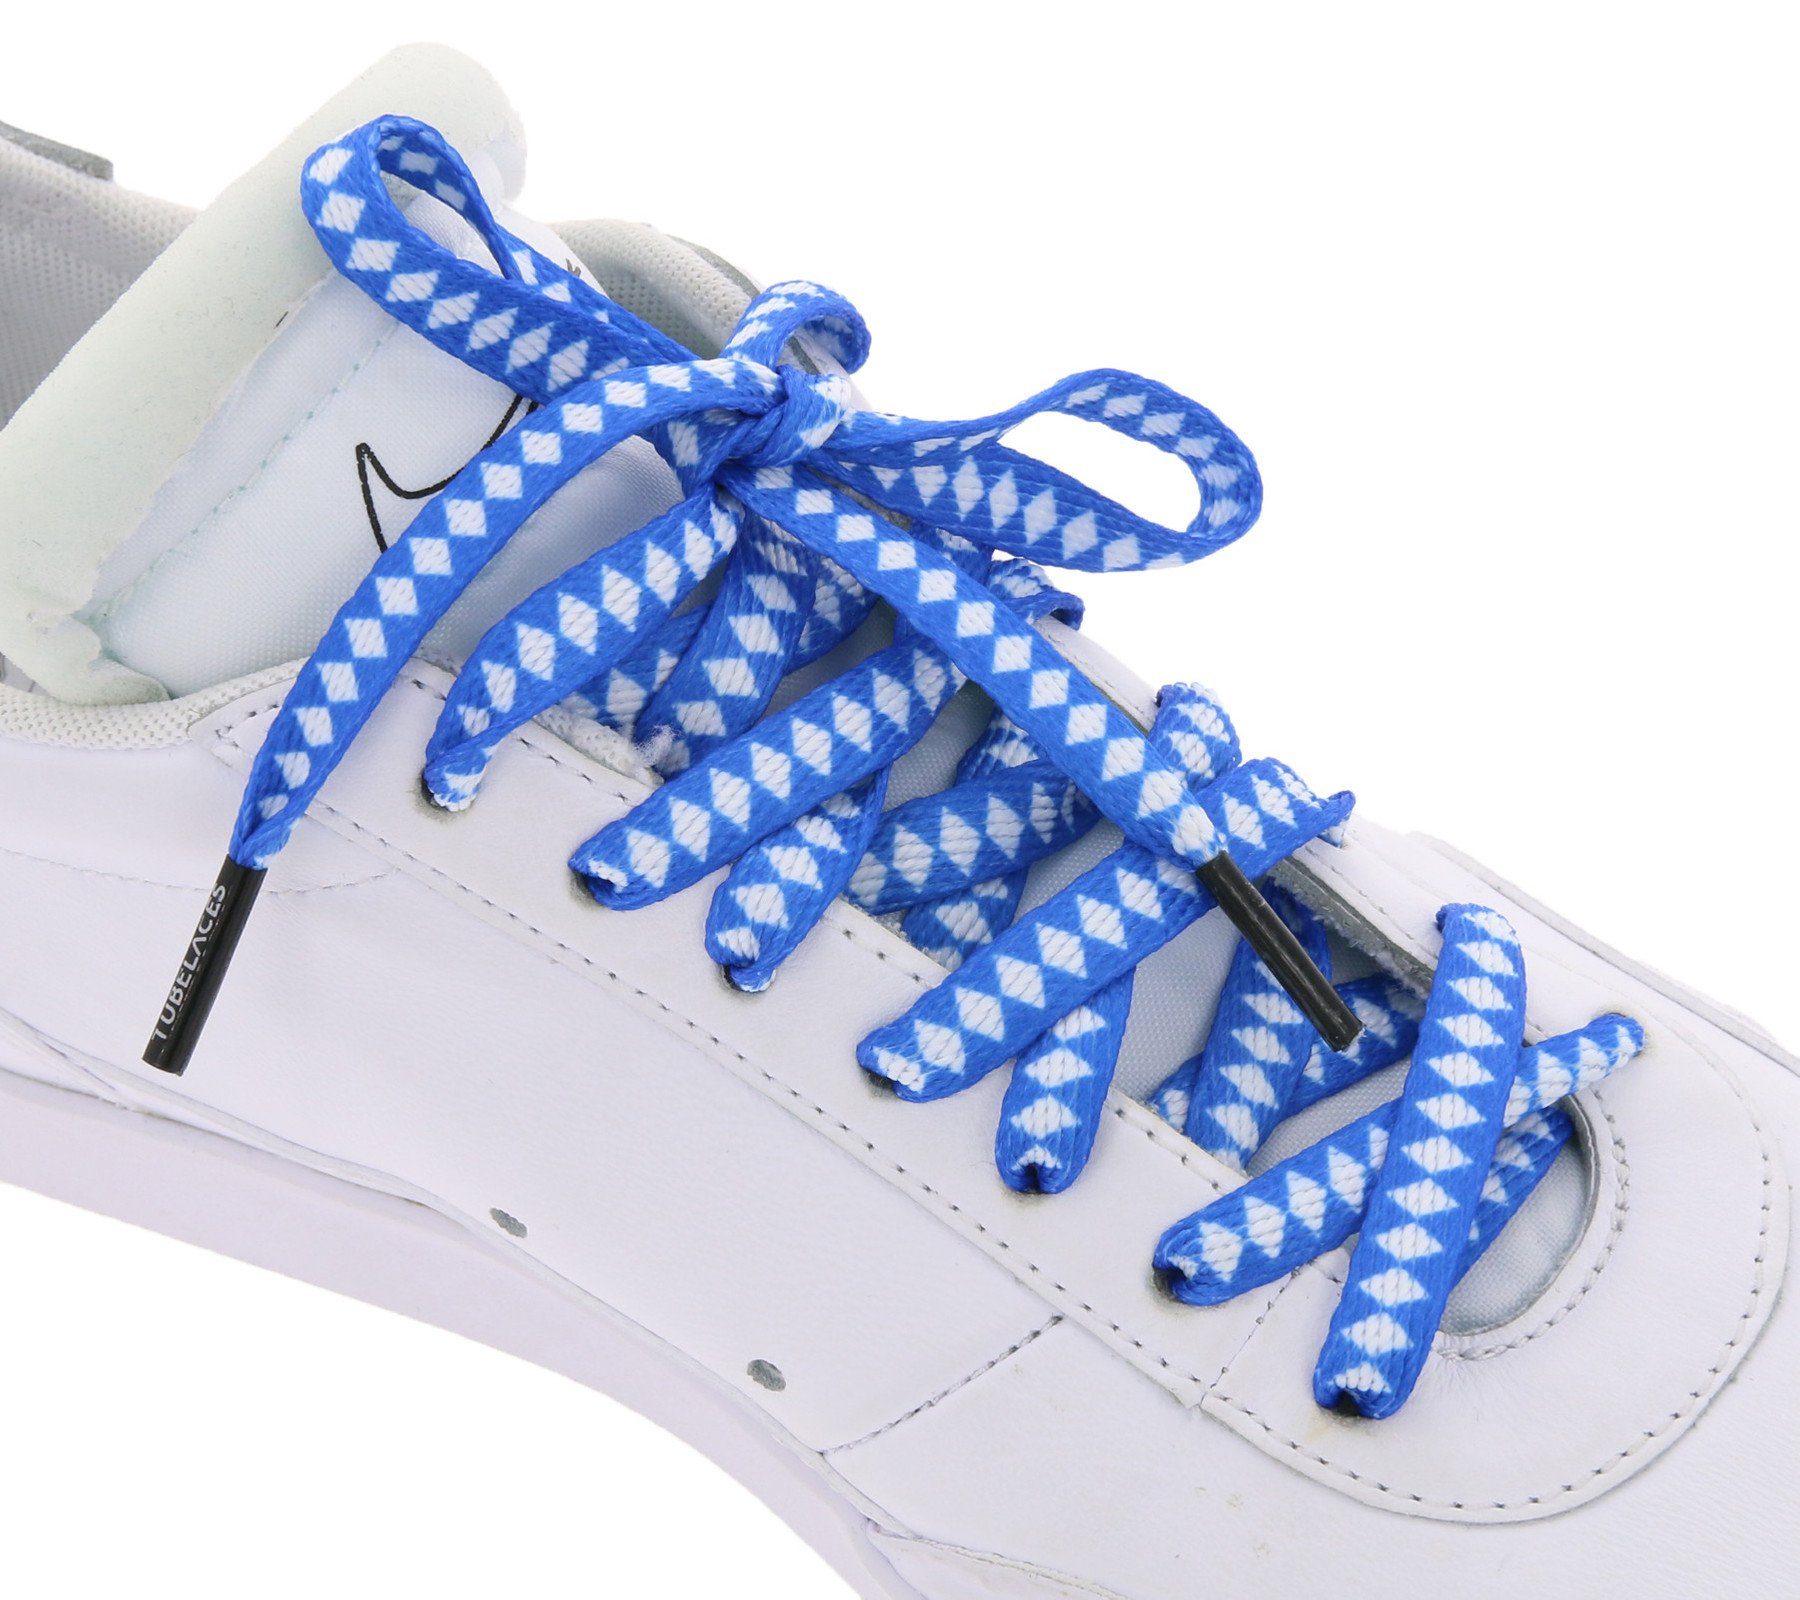 Tubelaces Schnürsenkel TubeLaces Schuhe Schuhbänder moderne Schnürsenkel Schnürbänder Bayern Blau/Weiß